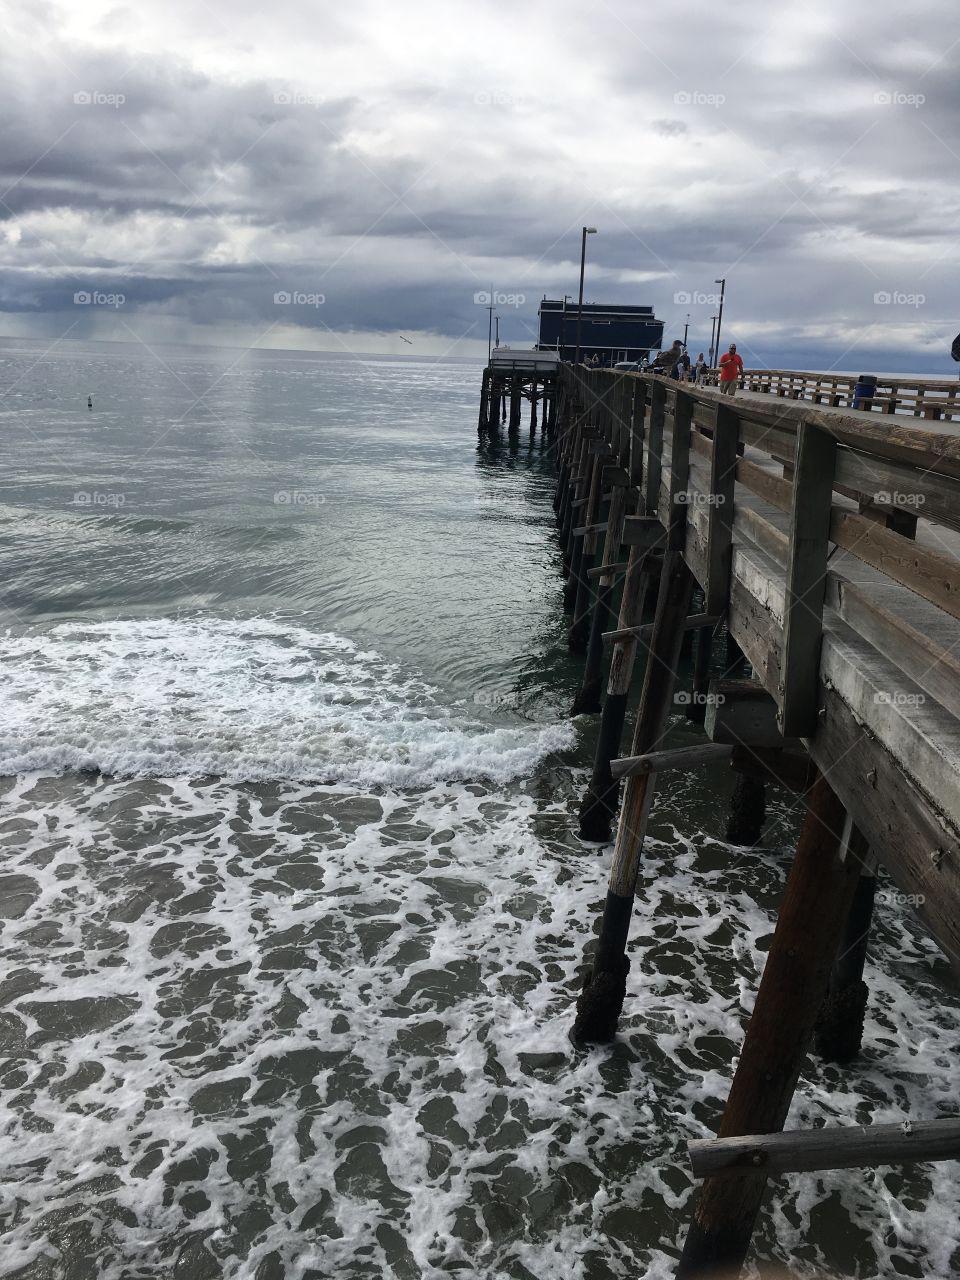 pier and storm 
newport beach CA USA
